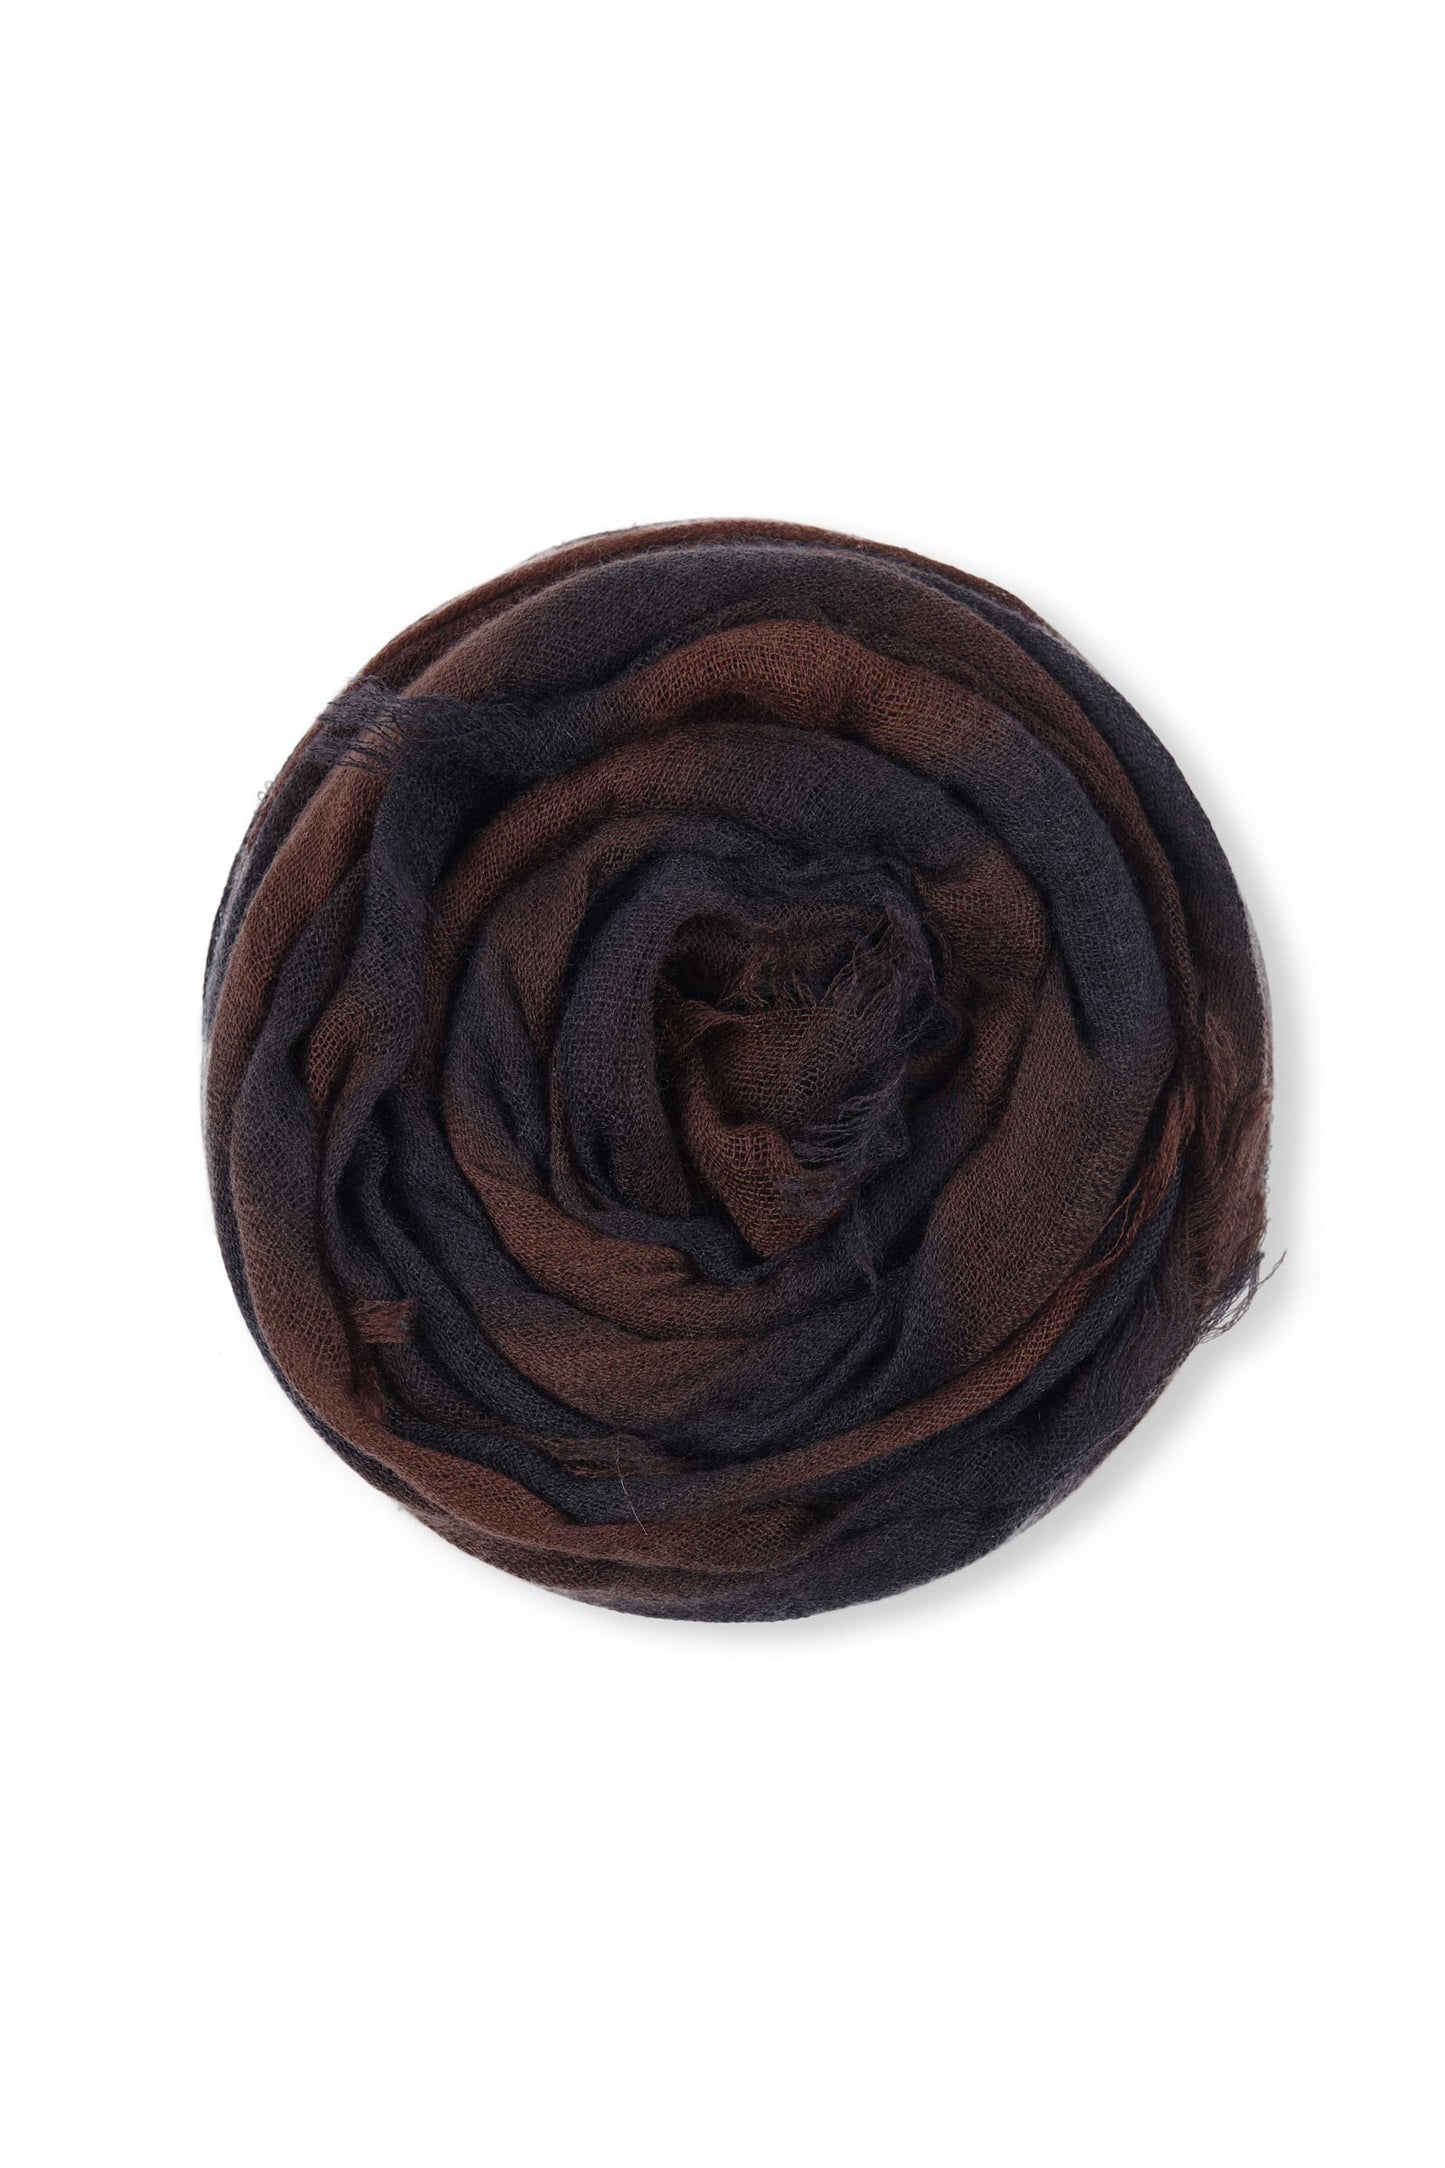 Giuseppe, mahogany tricolor foulard